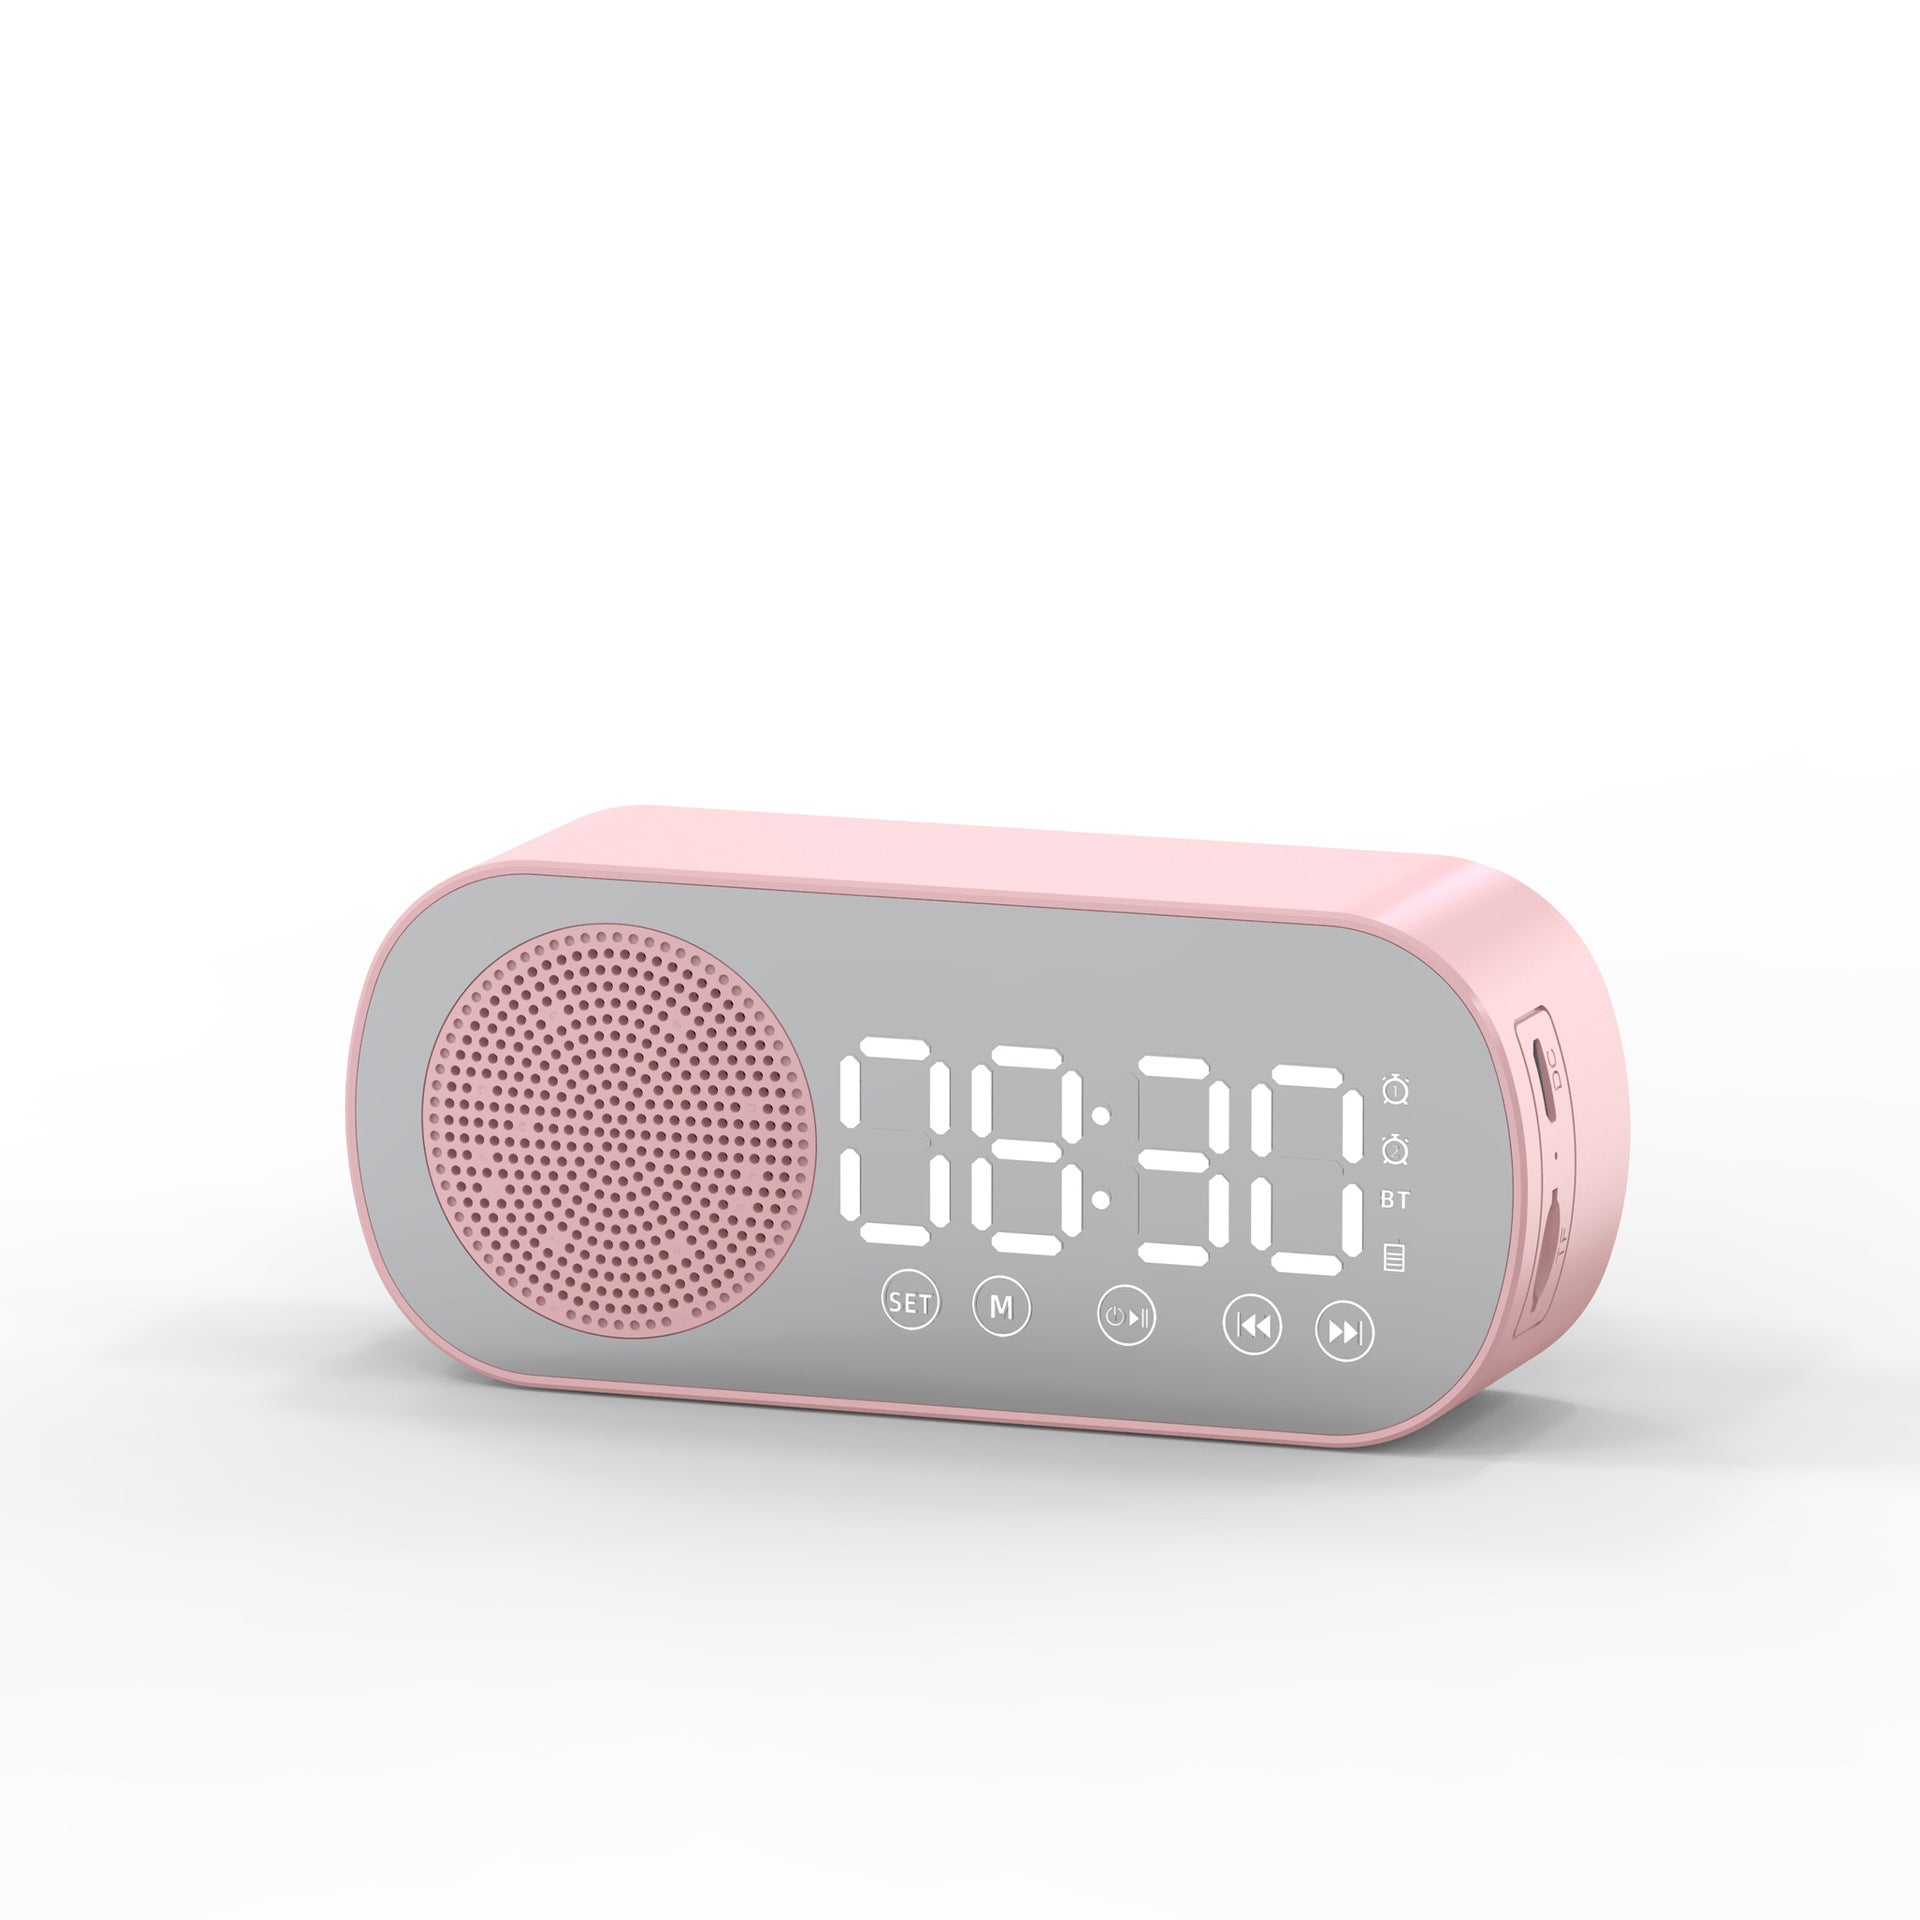 BT Music Alarm Clocks Mirror FM Radio LED Digital Clock 2 Alarm